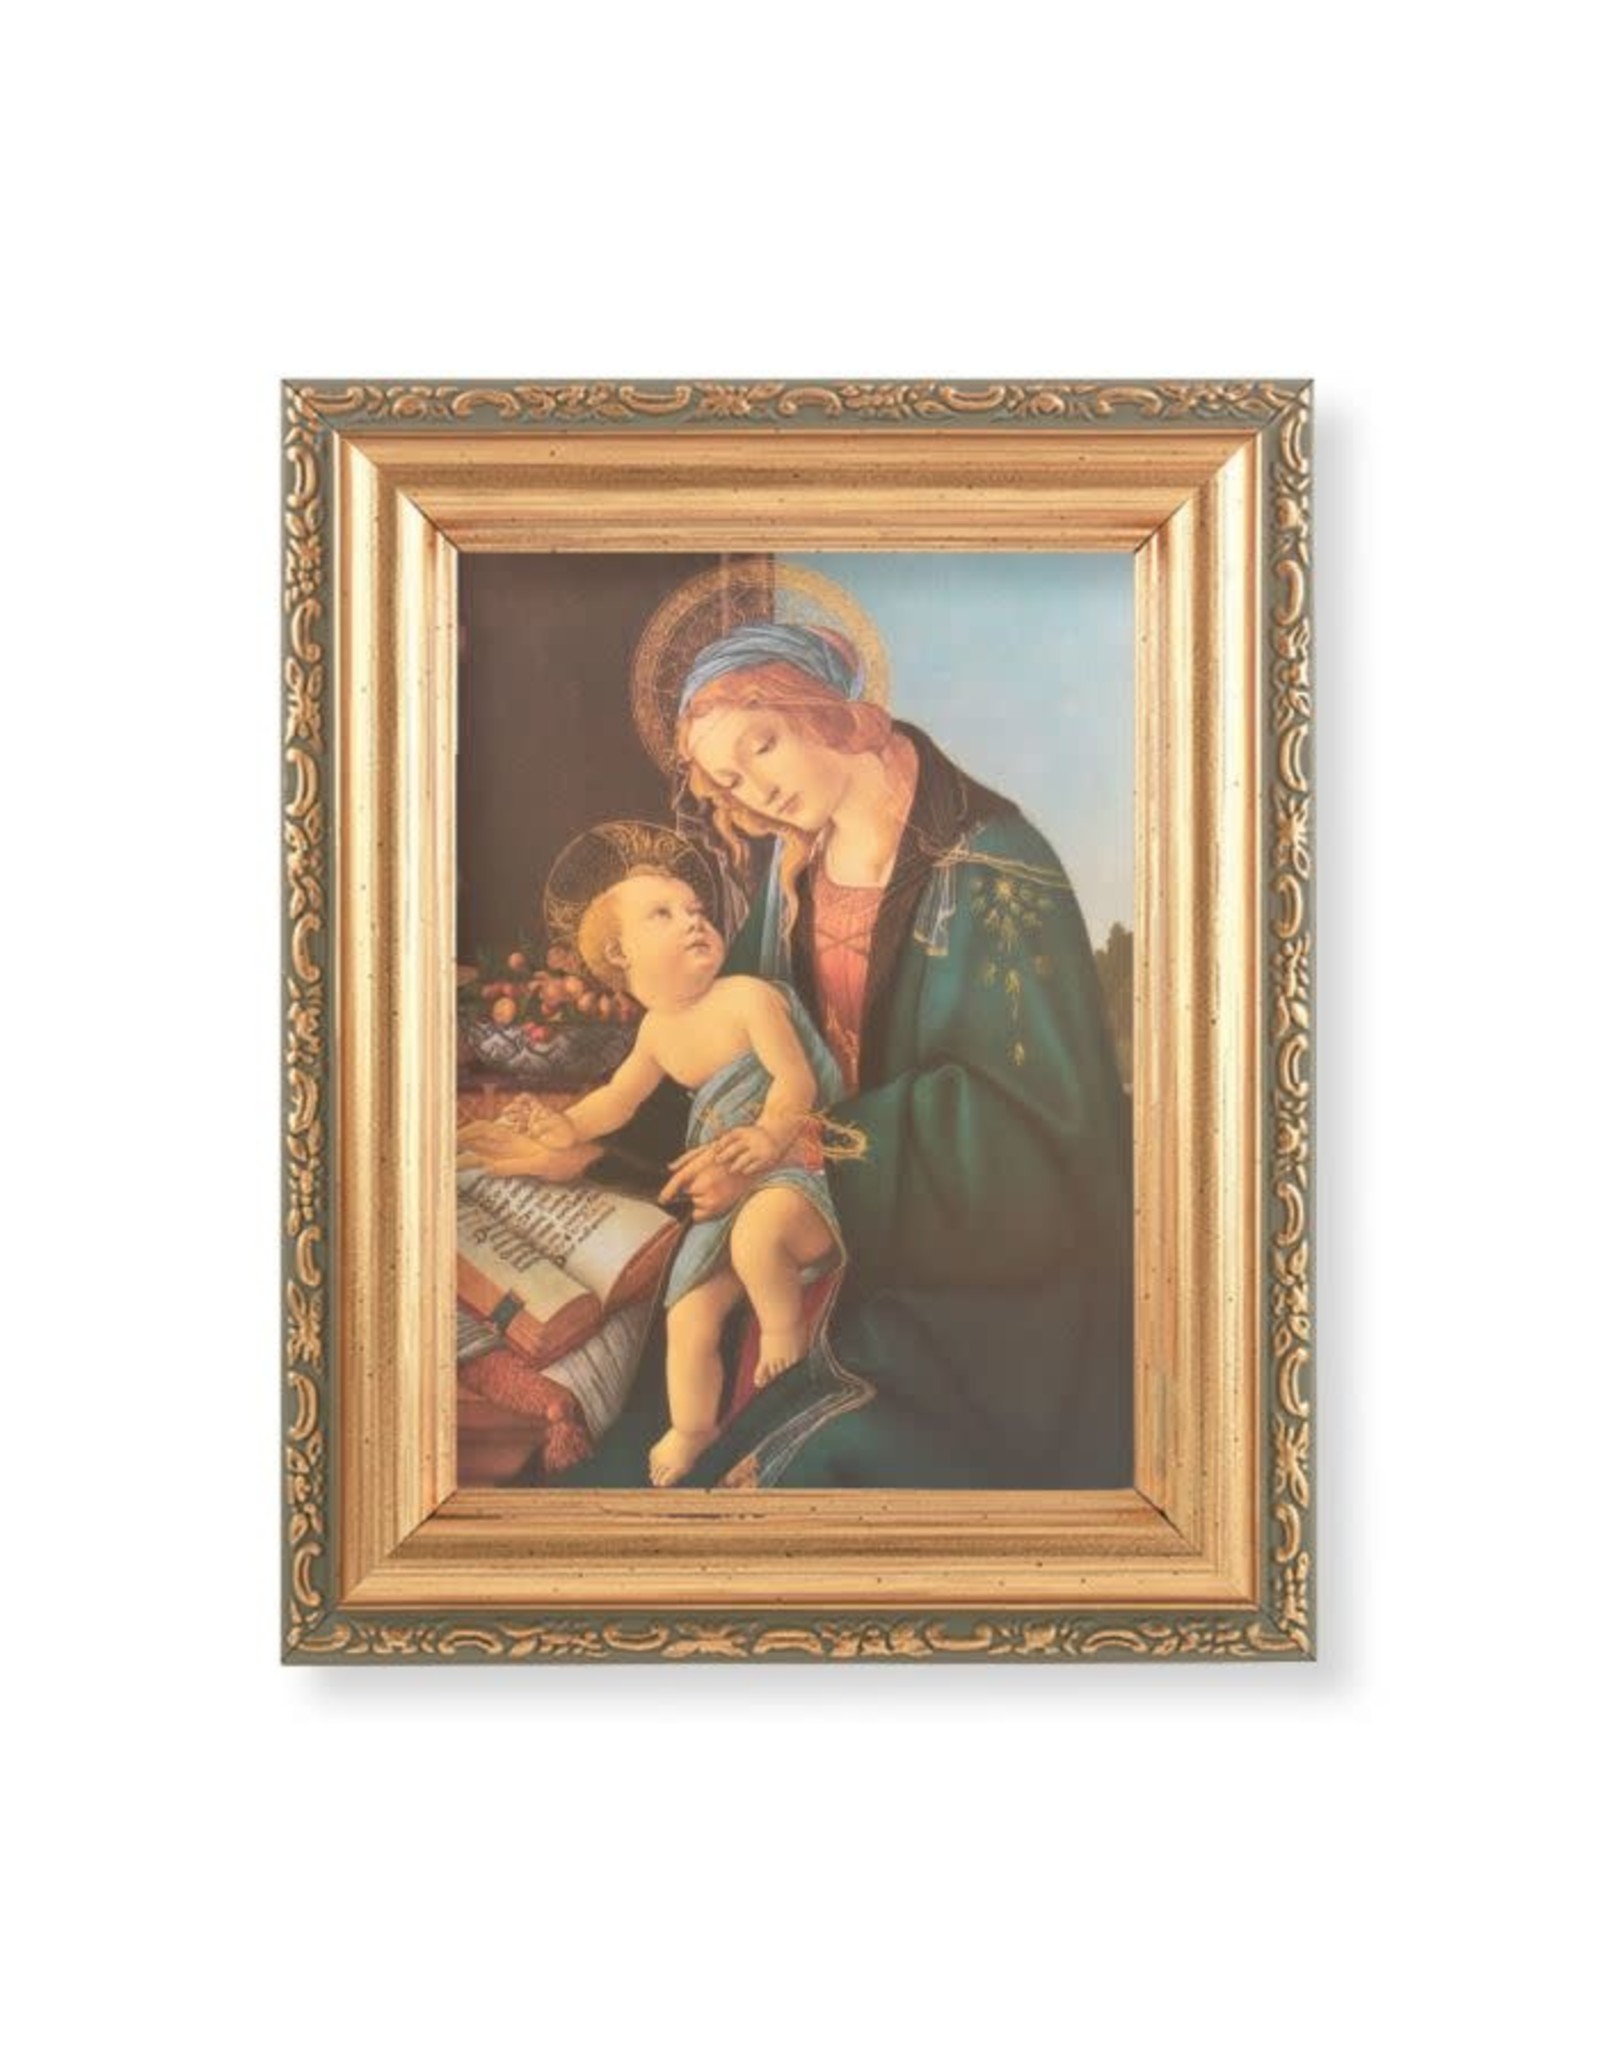 Hirten Picture - Madonna and Child, Gold Antique Frame, 5-1/2x7